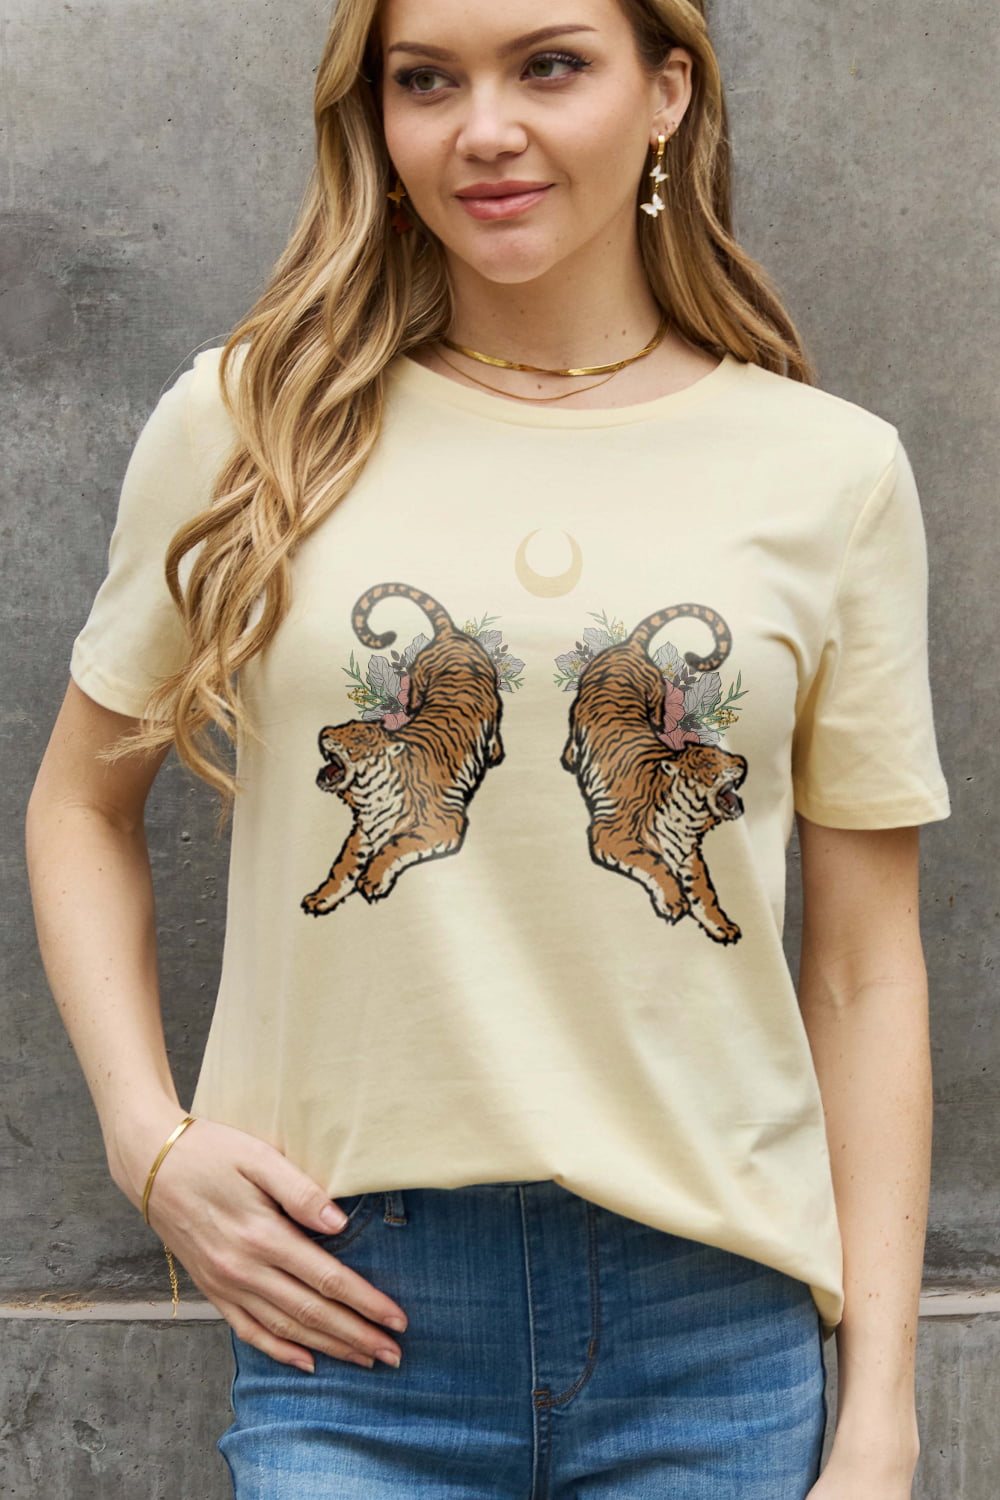 Simply Love Full Size Tiger Graphic Cotton Tee - TiffanyzKlozet